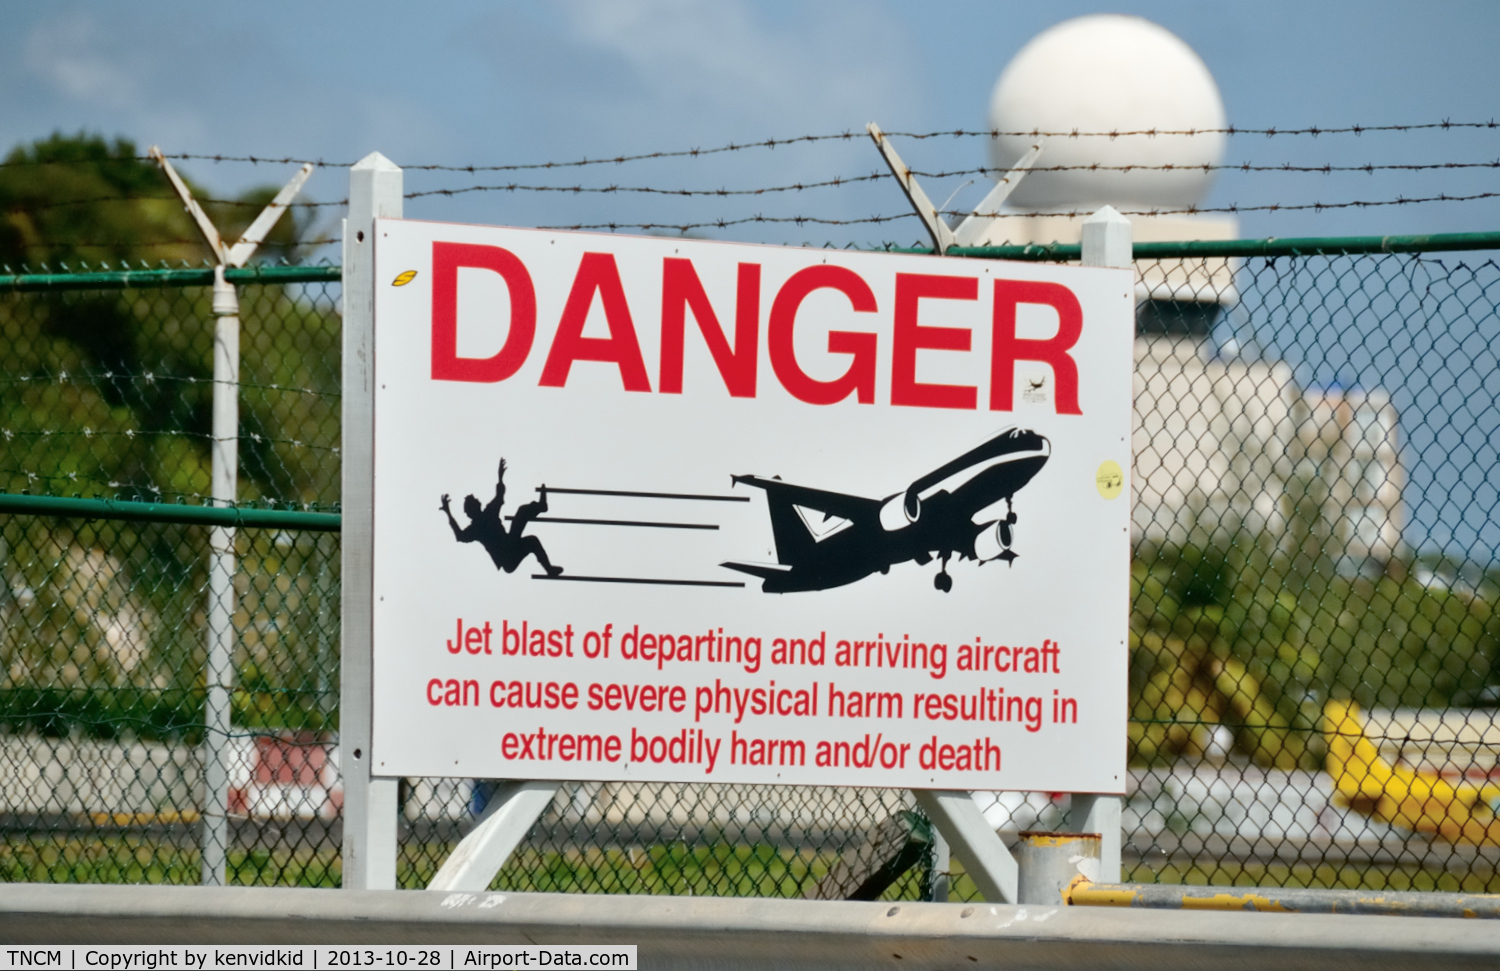 Princess Juliana International Airport, Philipsburg, Sint Maarten Netherlands Antilles (TNCM) - Warning sign especially poignant when MD-80 aircraft is departing.